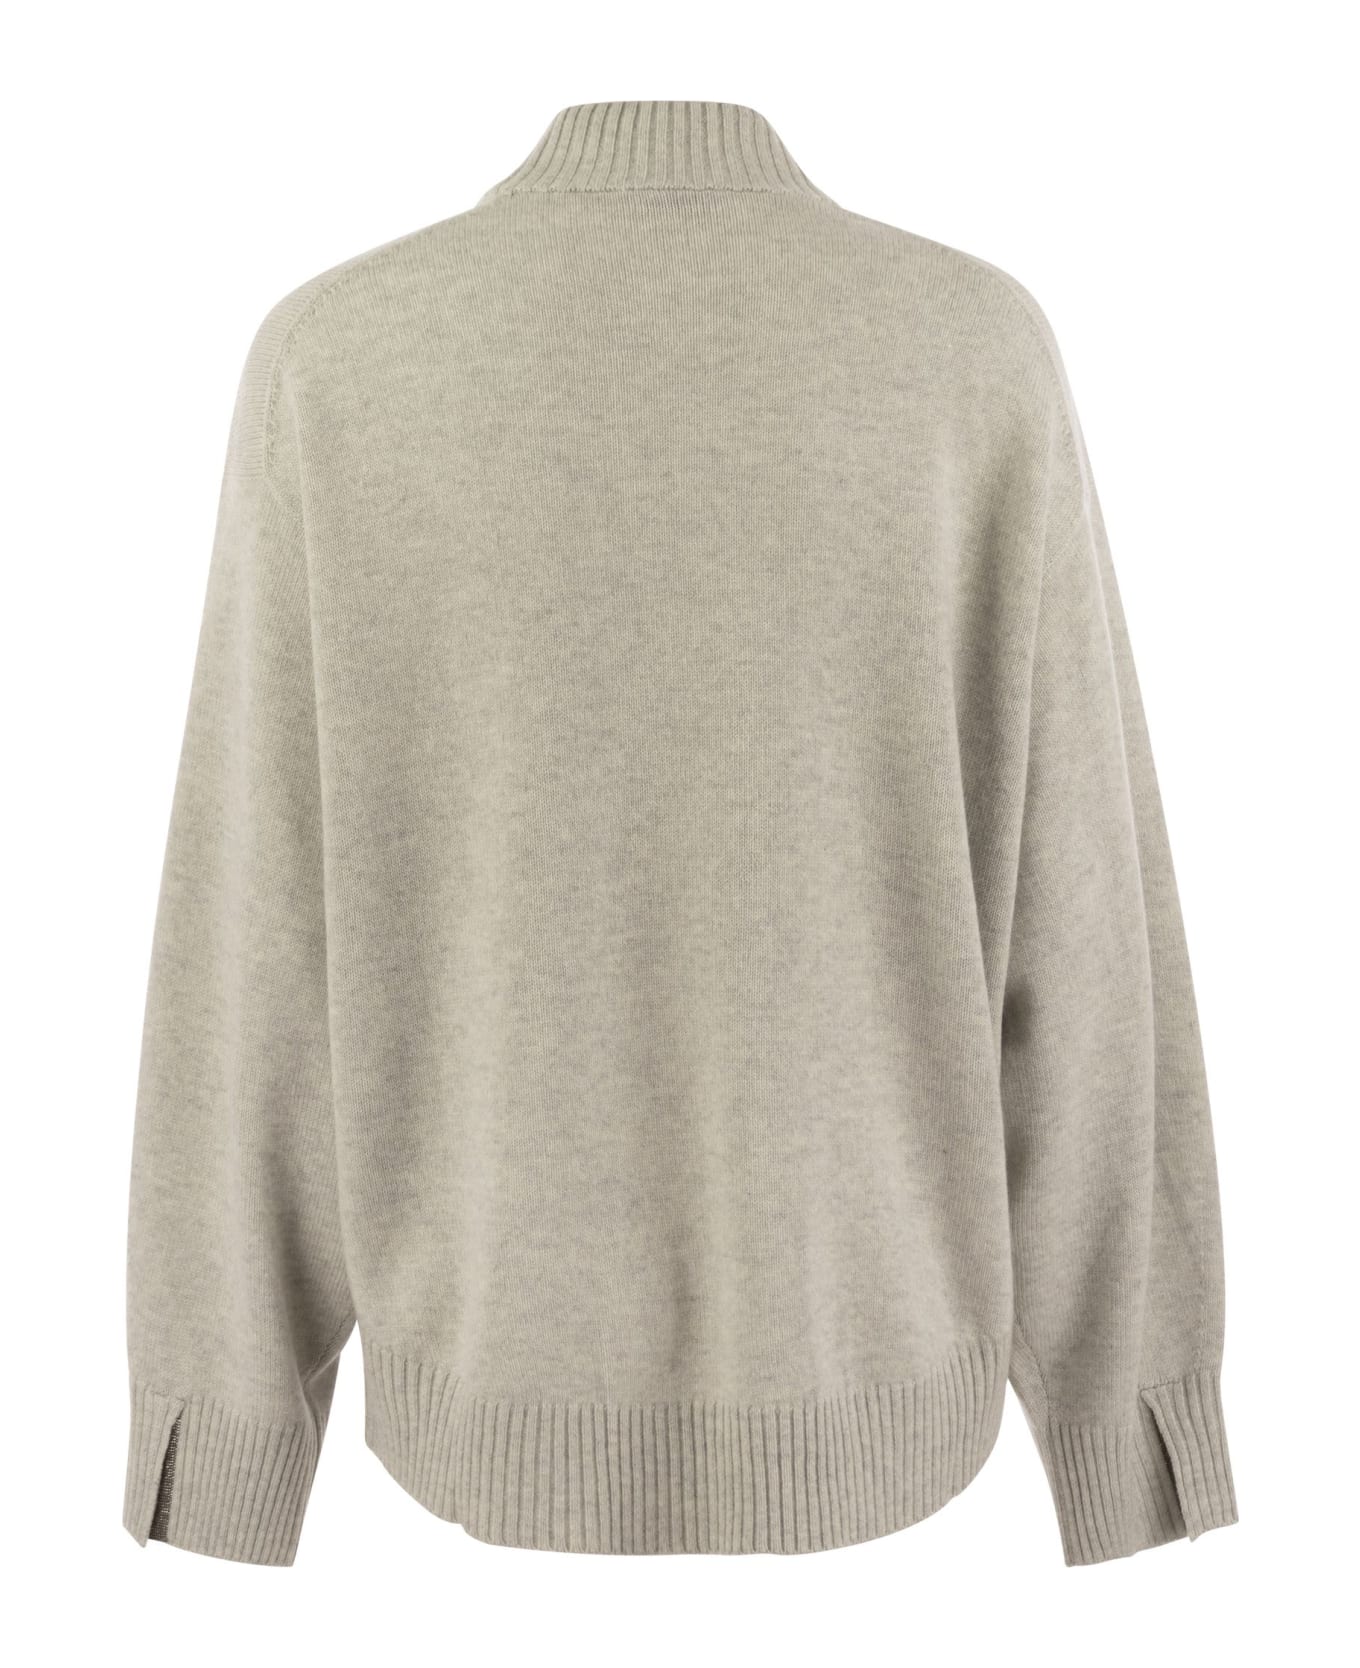 Brunello Cucinelli Cashmere Chimney Neck Sweater With Shiny Cuff Details - Light Grey